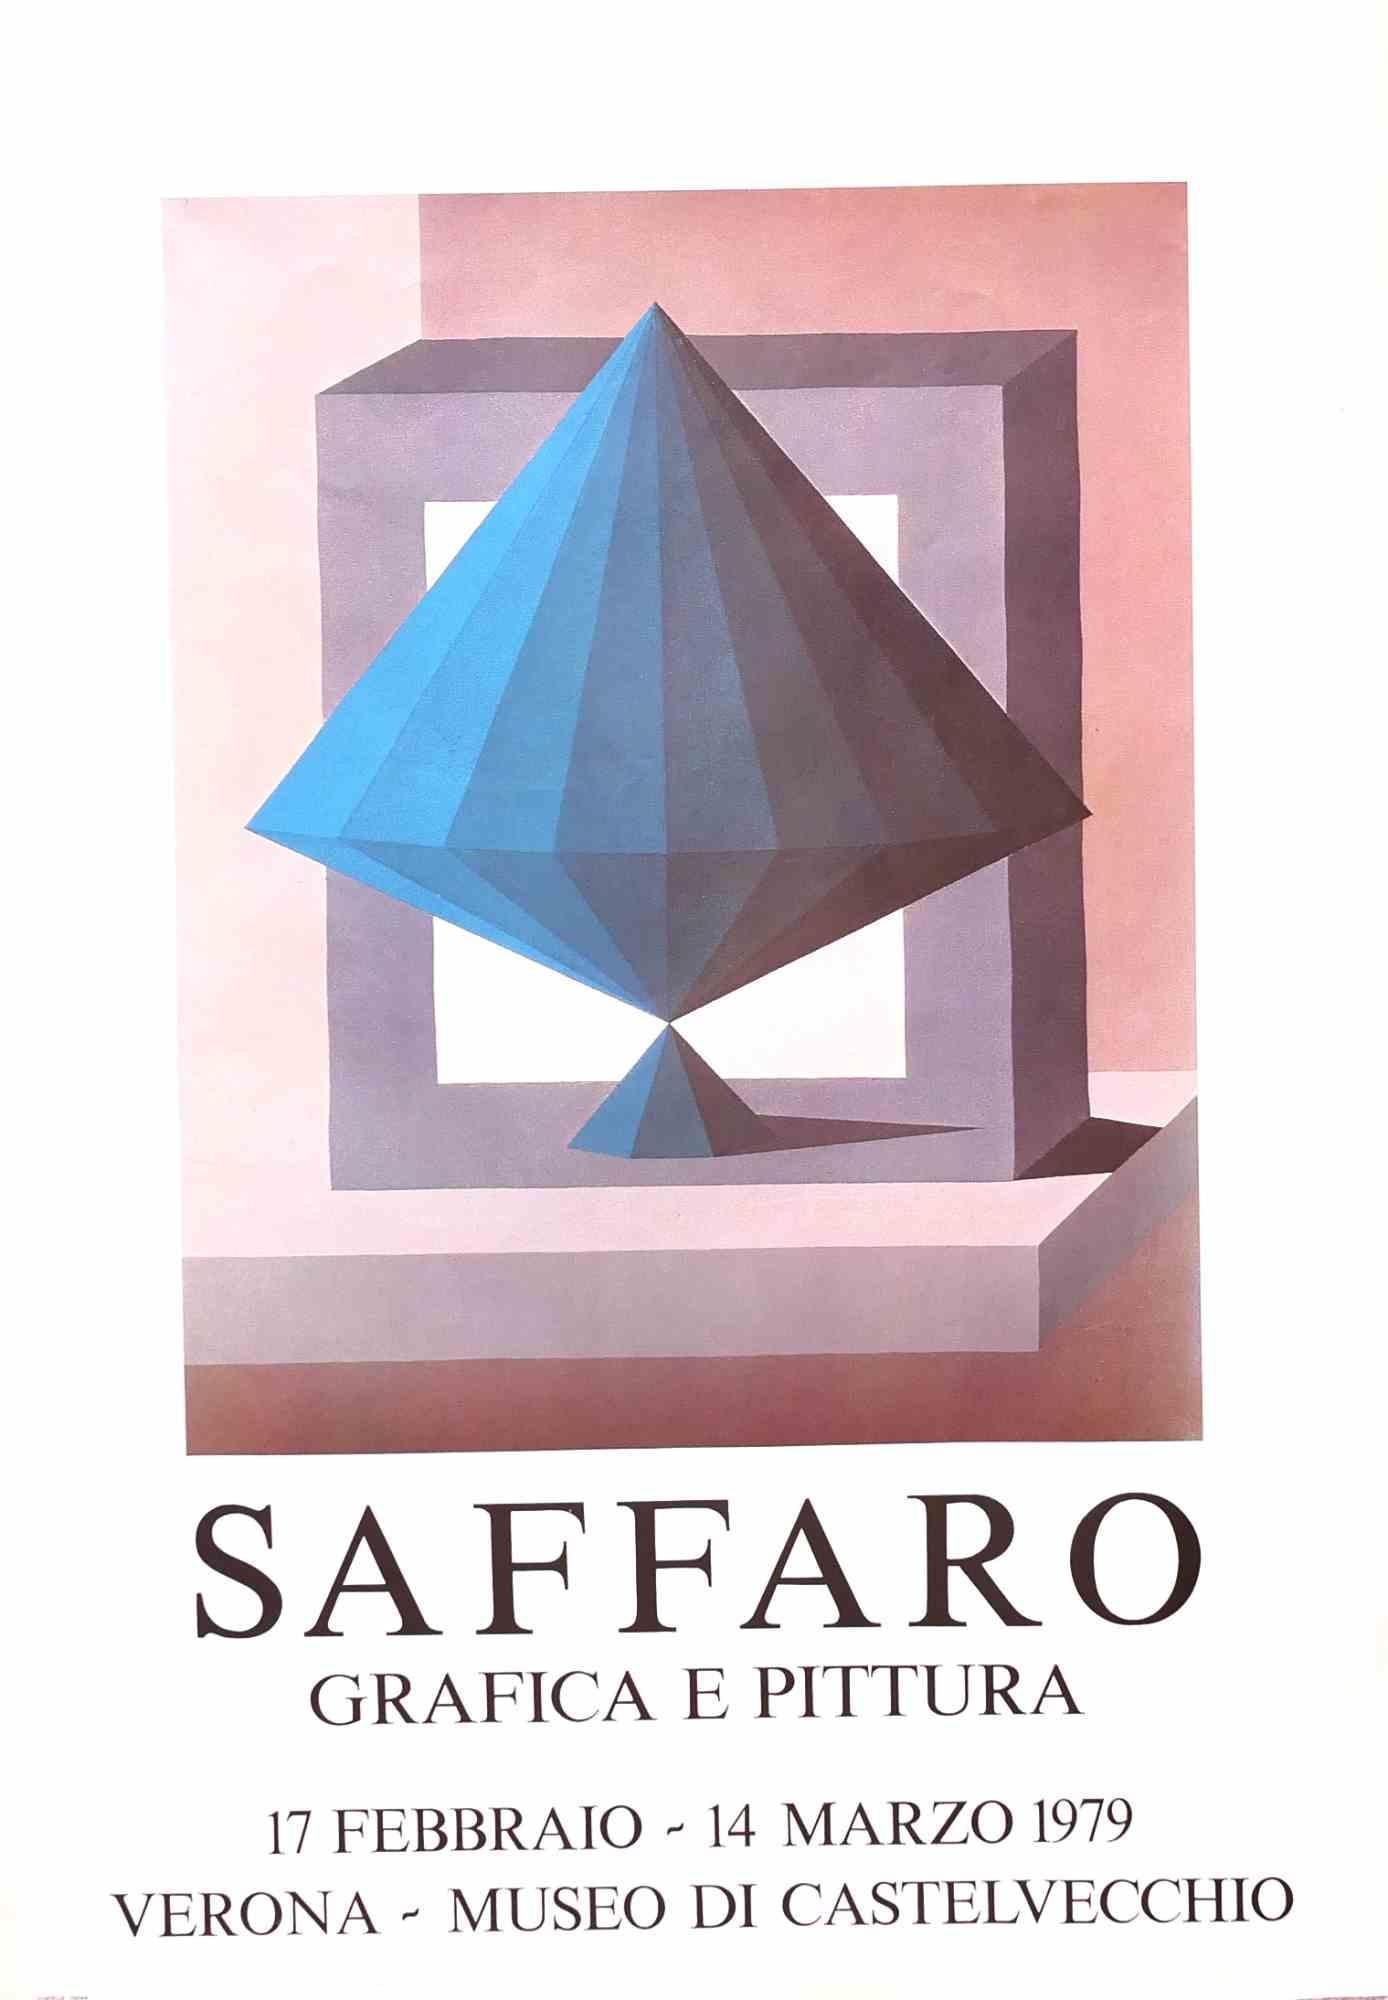 Abstract Print Unknown - Affiche vintage de Lucio Saffaro - 1979